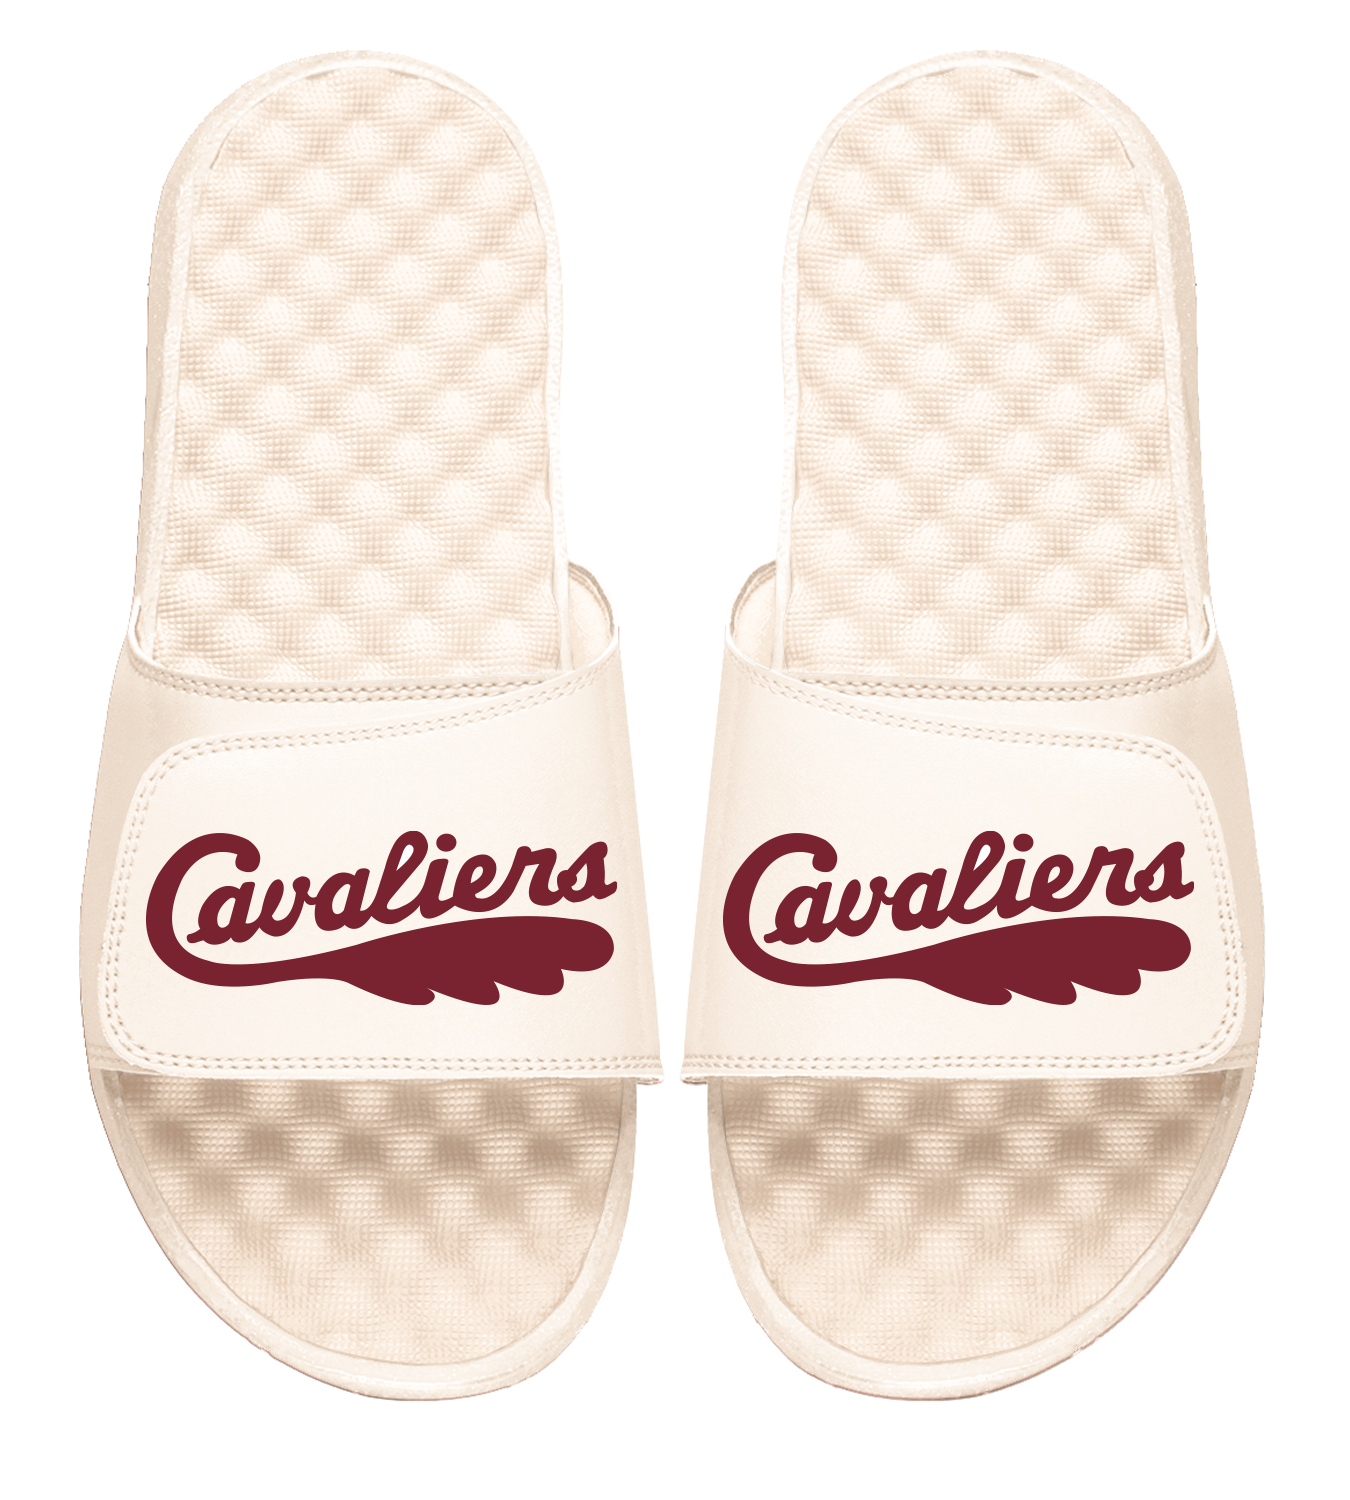 Cavs Cream Slides